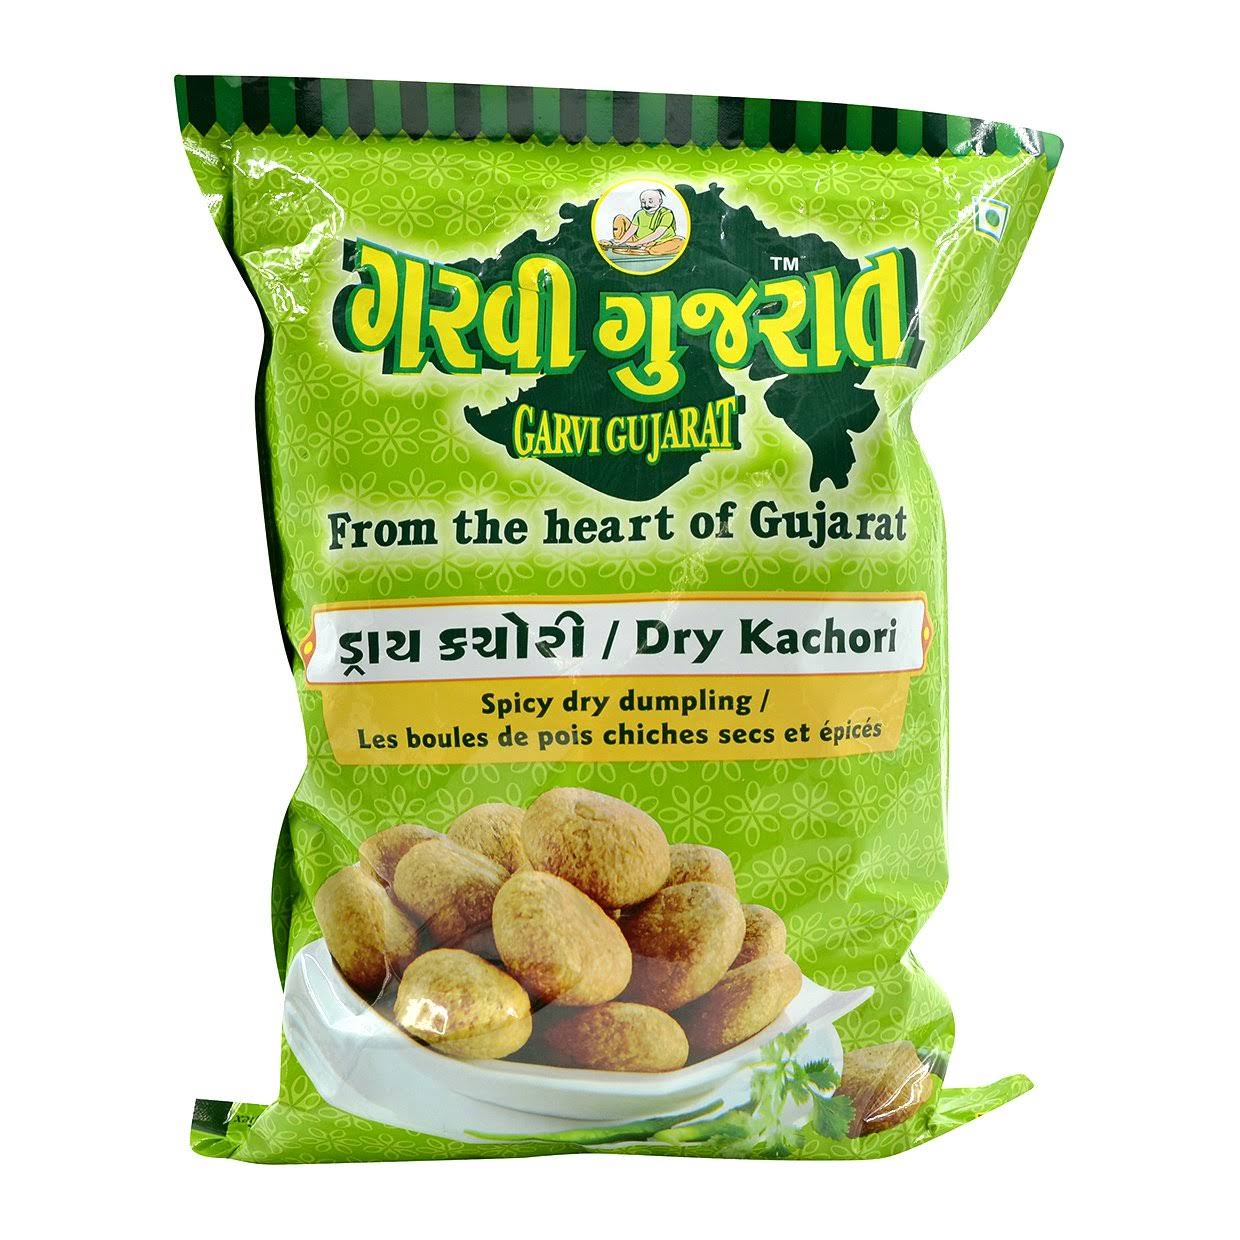 Garvi Gujarat Dry Kachori 2 lbs